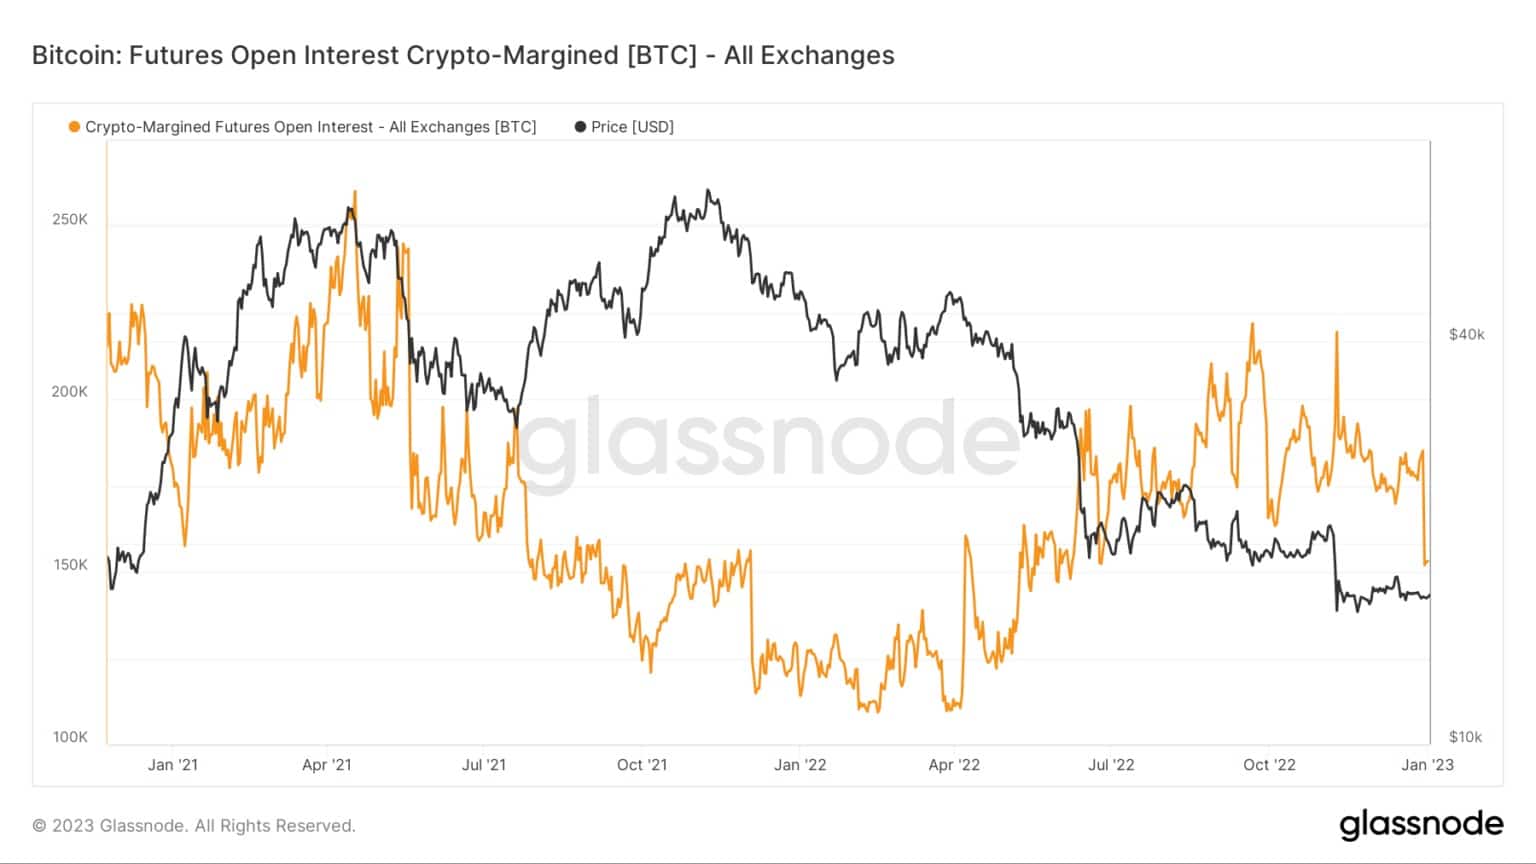 Bitcoin: kryptowaluta Futures Open Interest [BTC] - Źródło: Glassnode.com